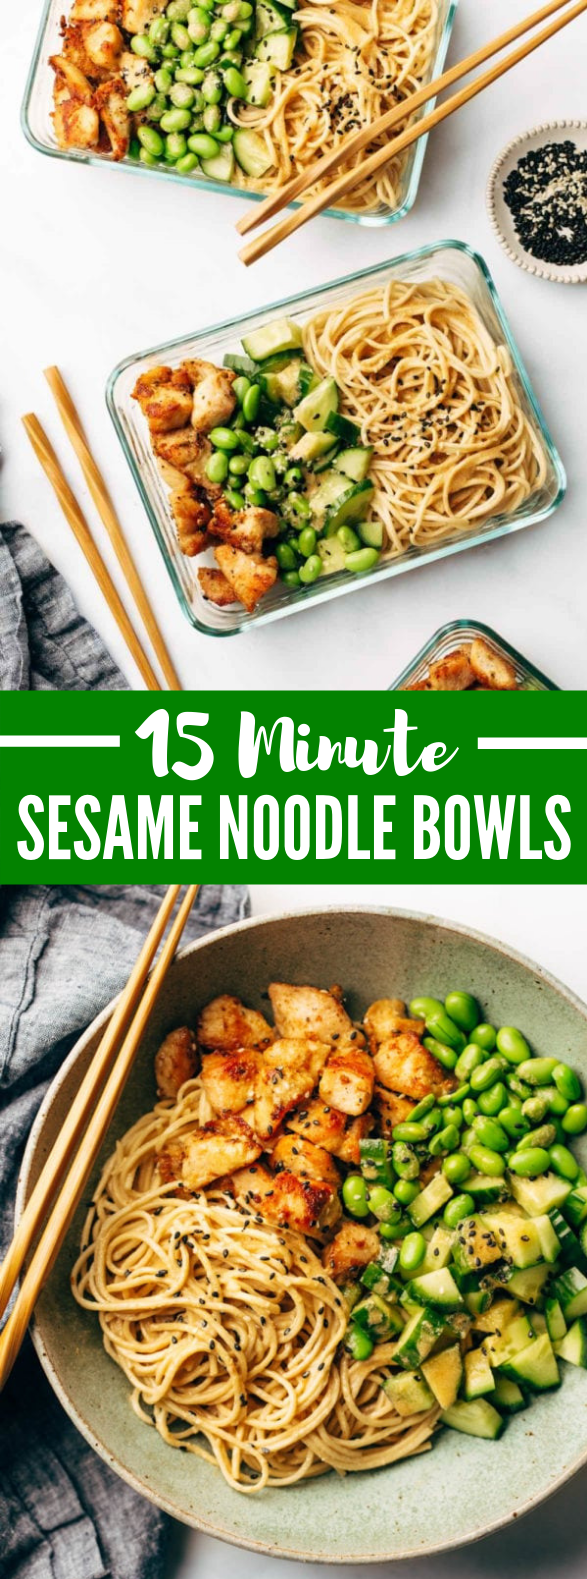 15 Minute Meal Prep: Sesame Noodle Bowls #lunch #meal